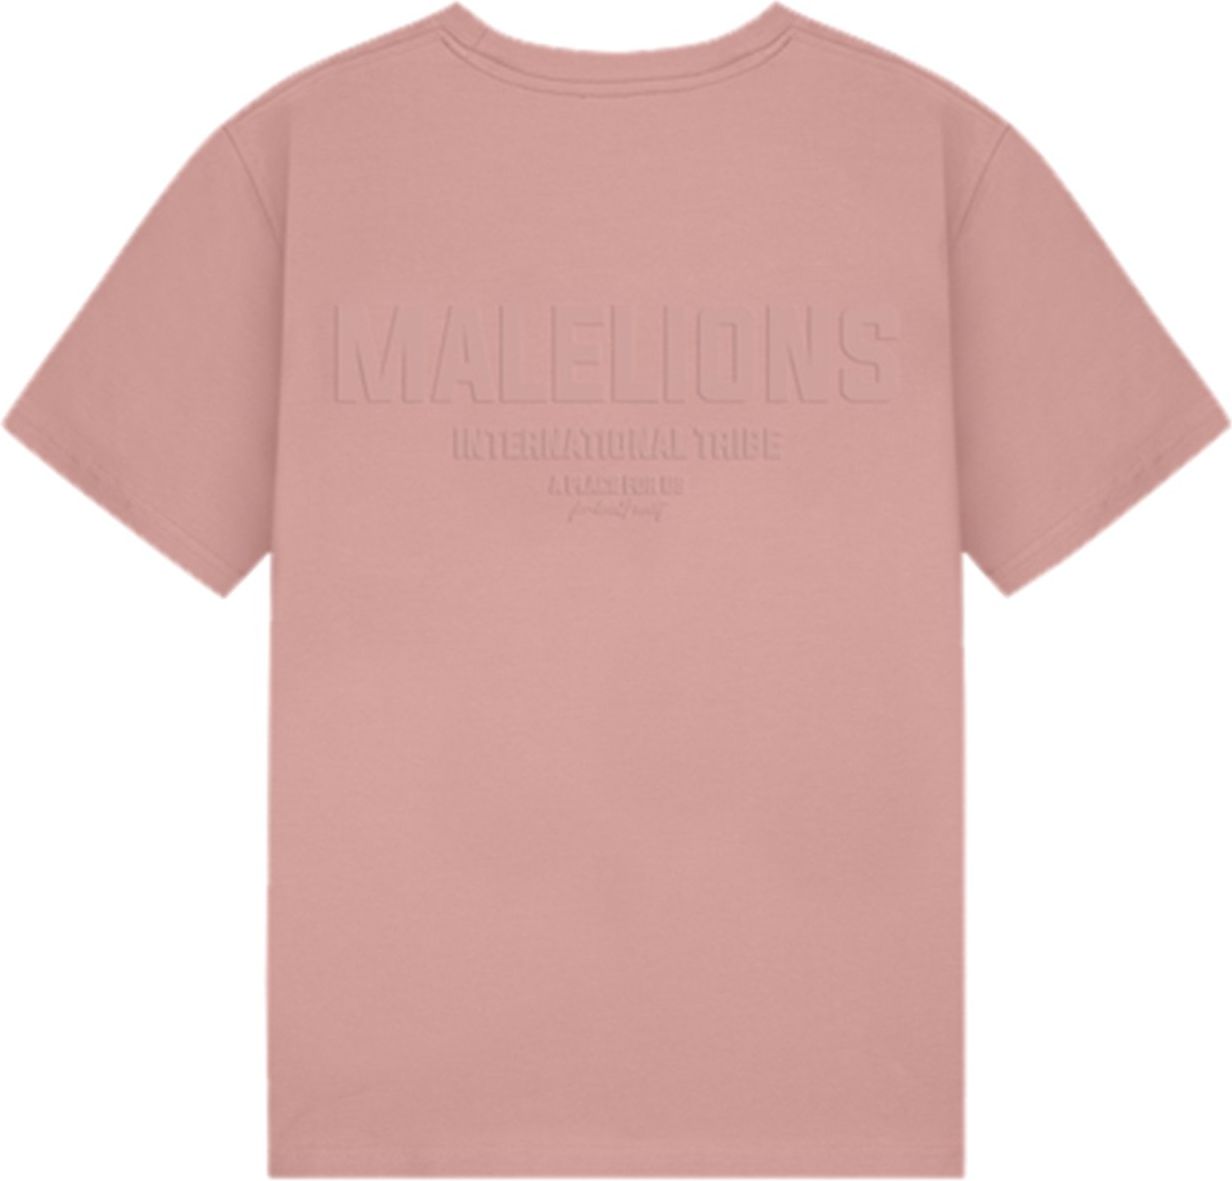 Malelions Tribe T-Shirt - Mauve Roze